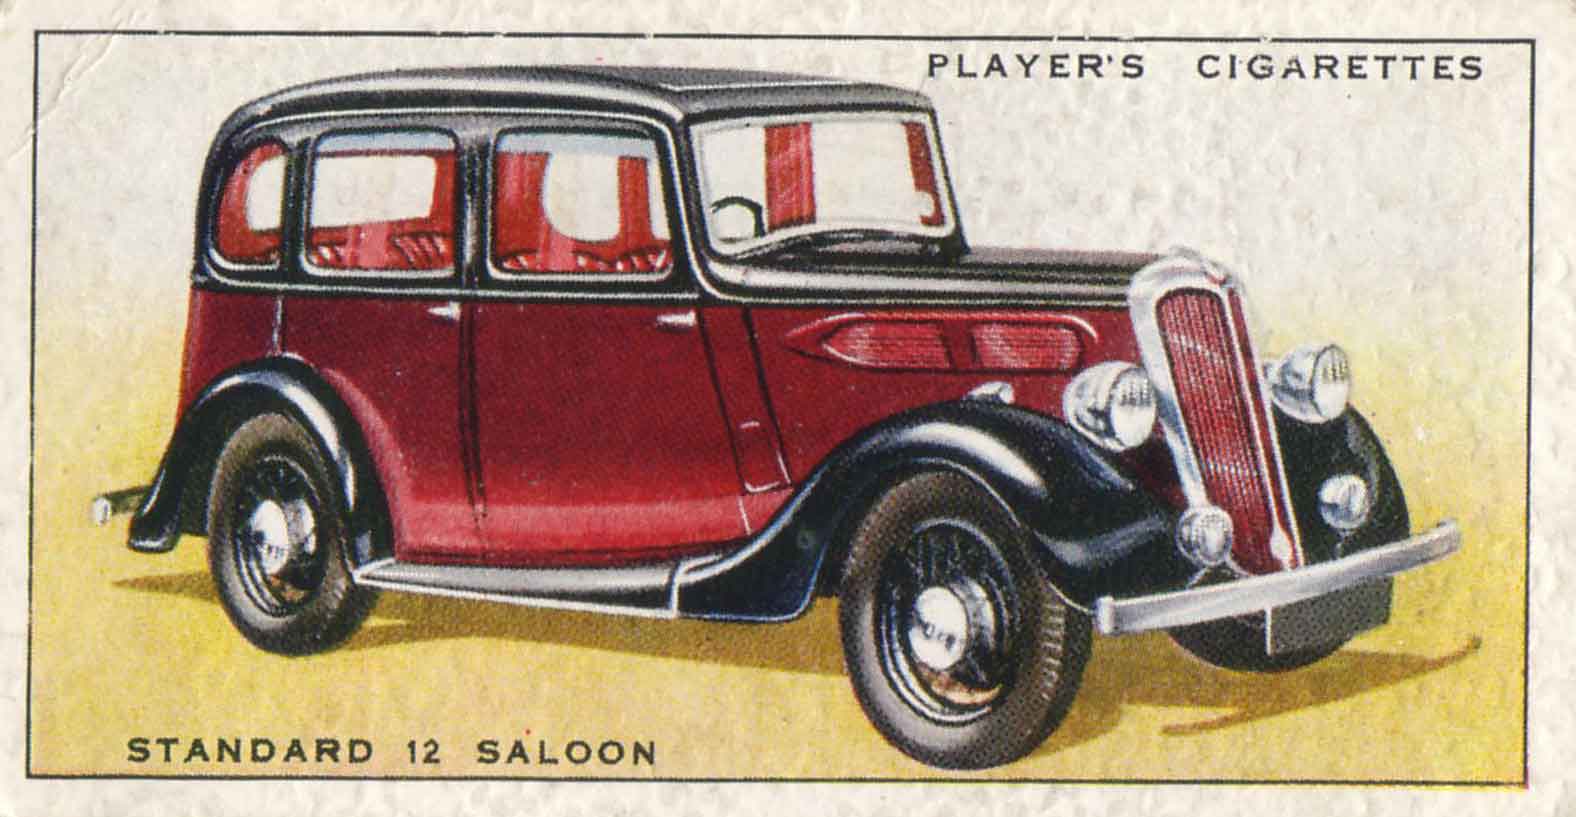 Standard 12 Saloon. 1937 cigarette card.